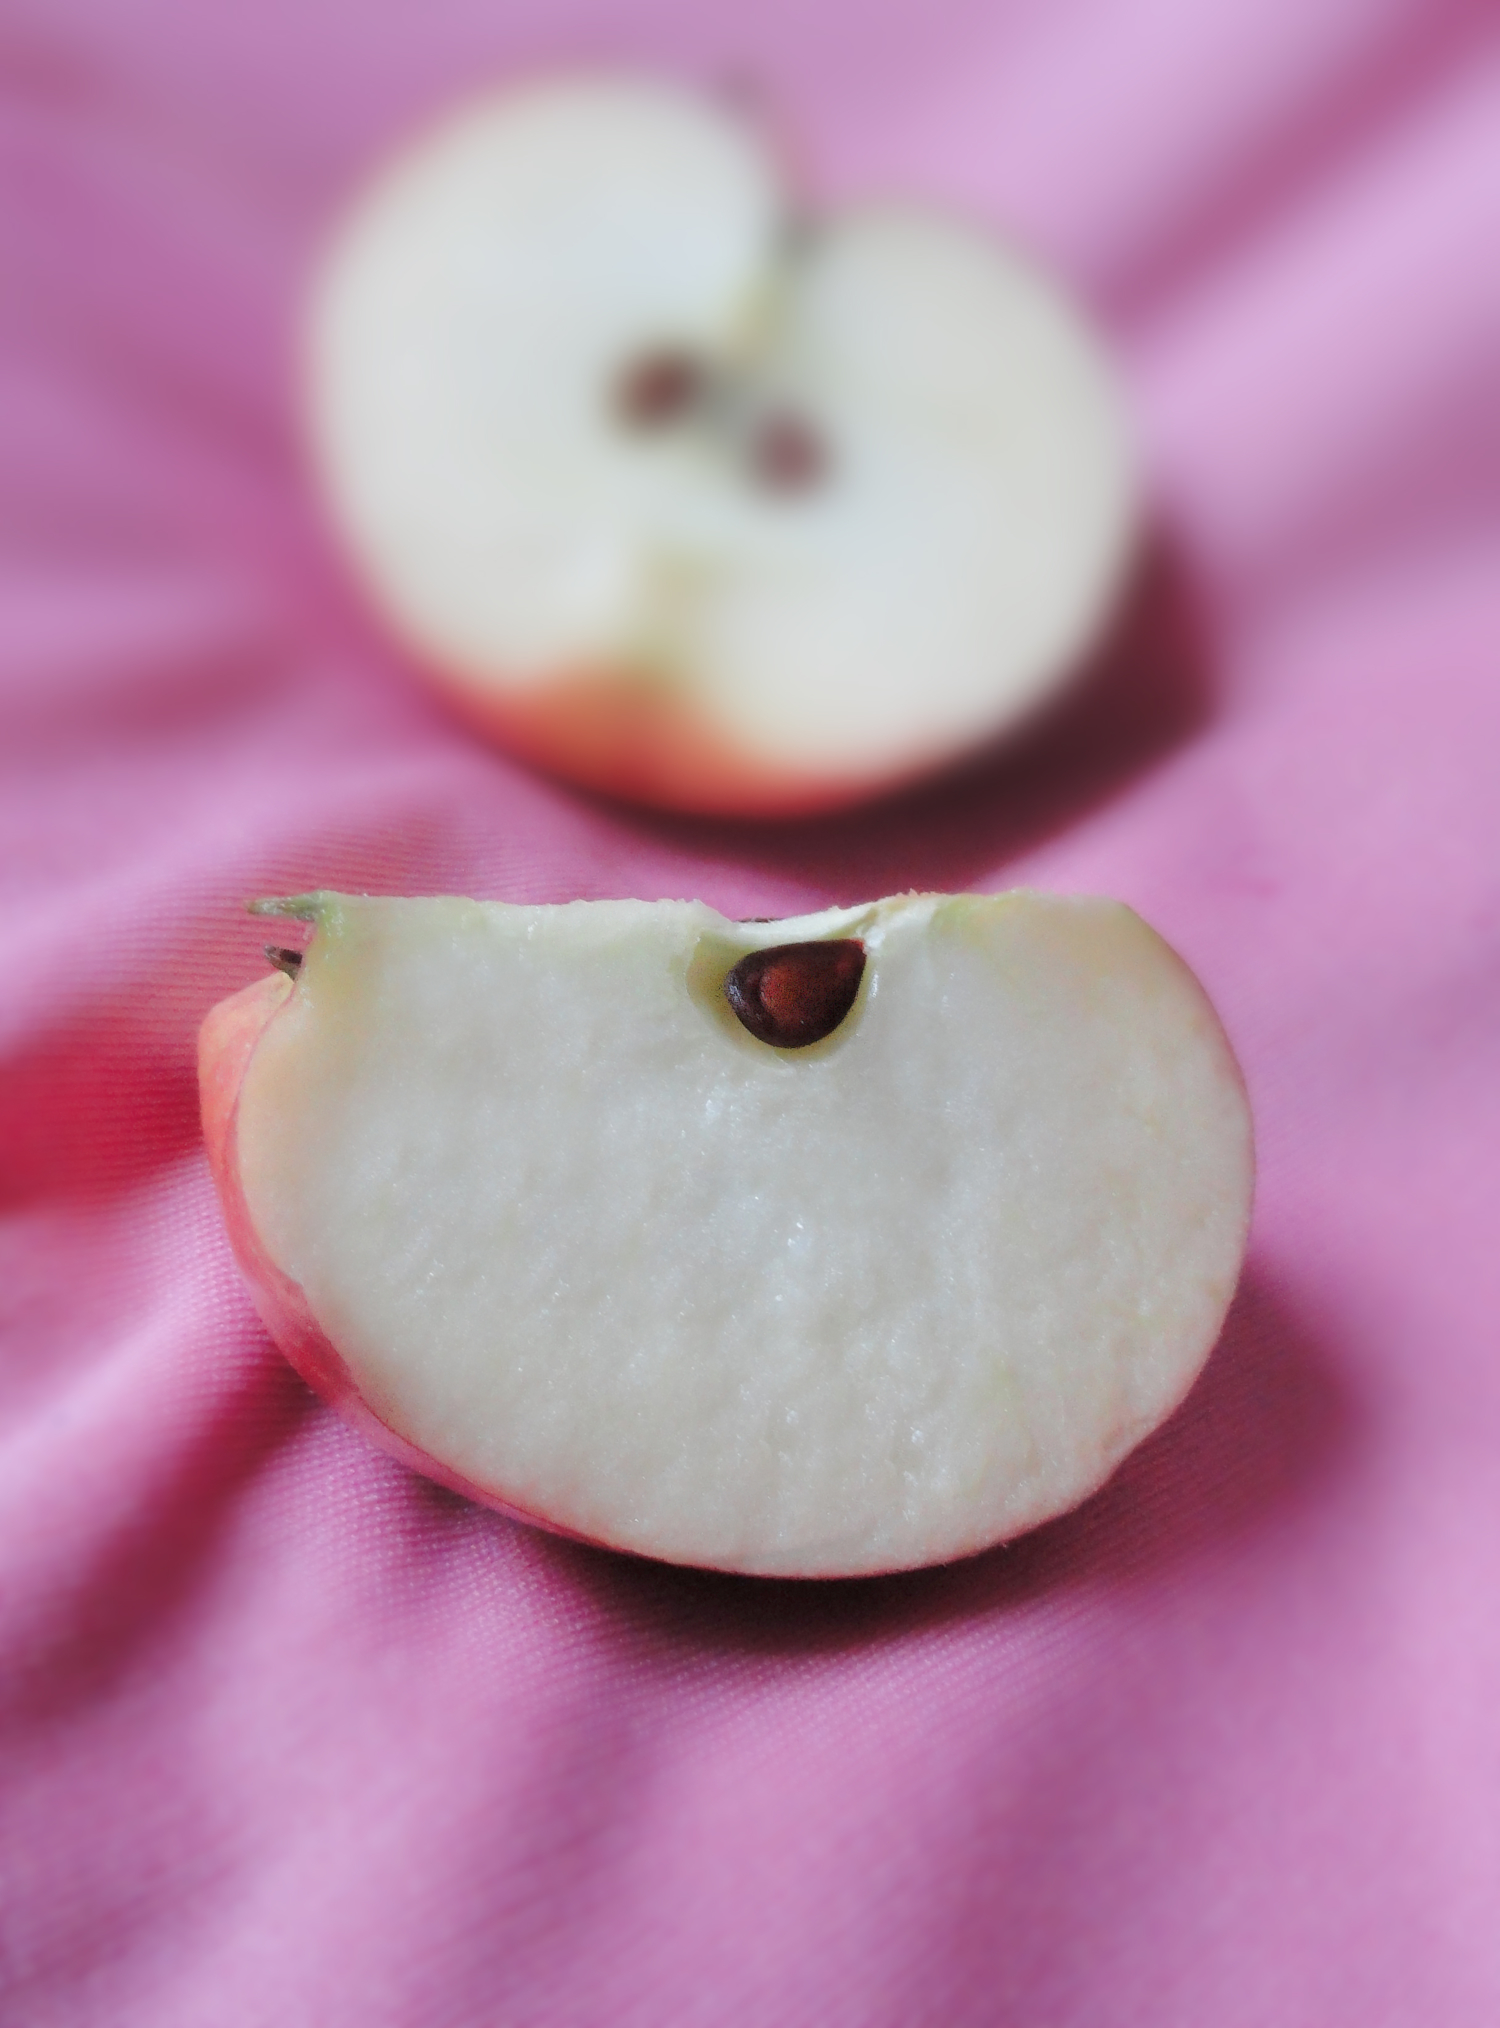 A Slice of Apple